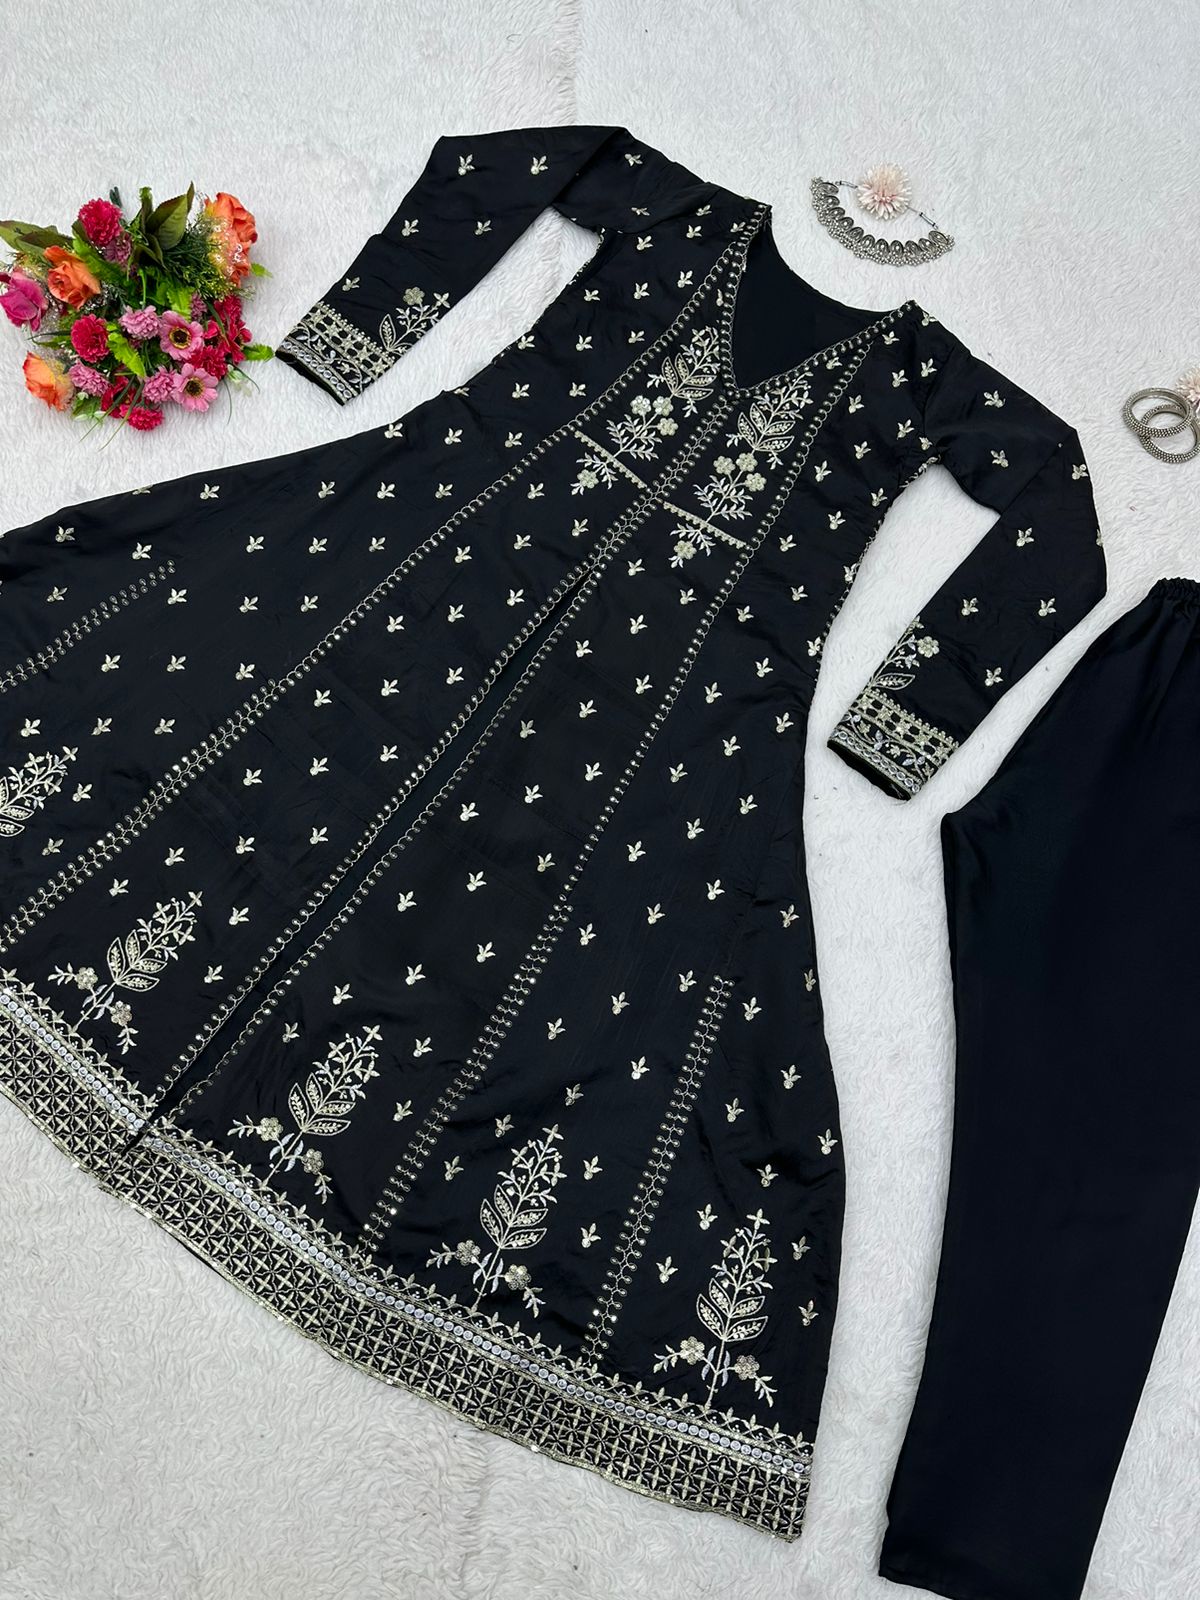 Admiring Black Color Thread Work Anarkali Suit